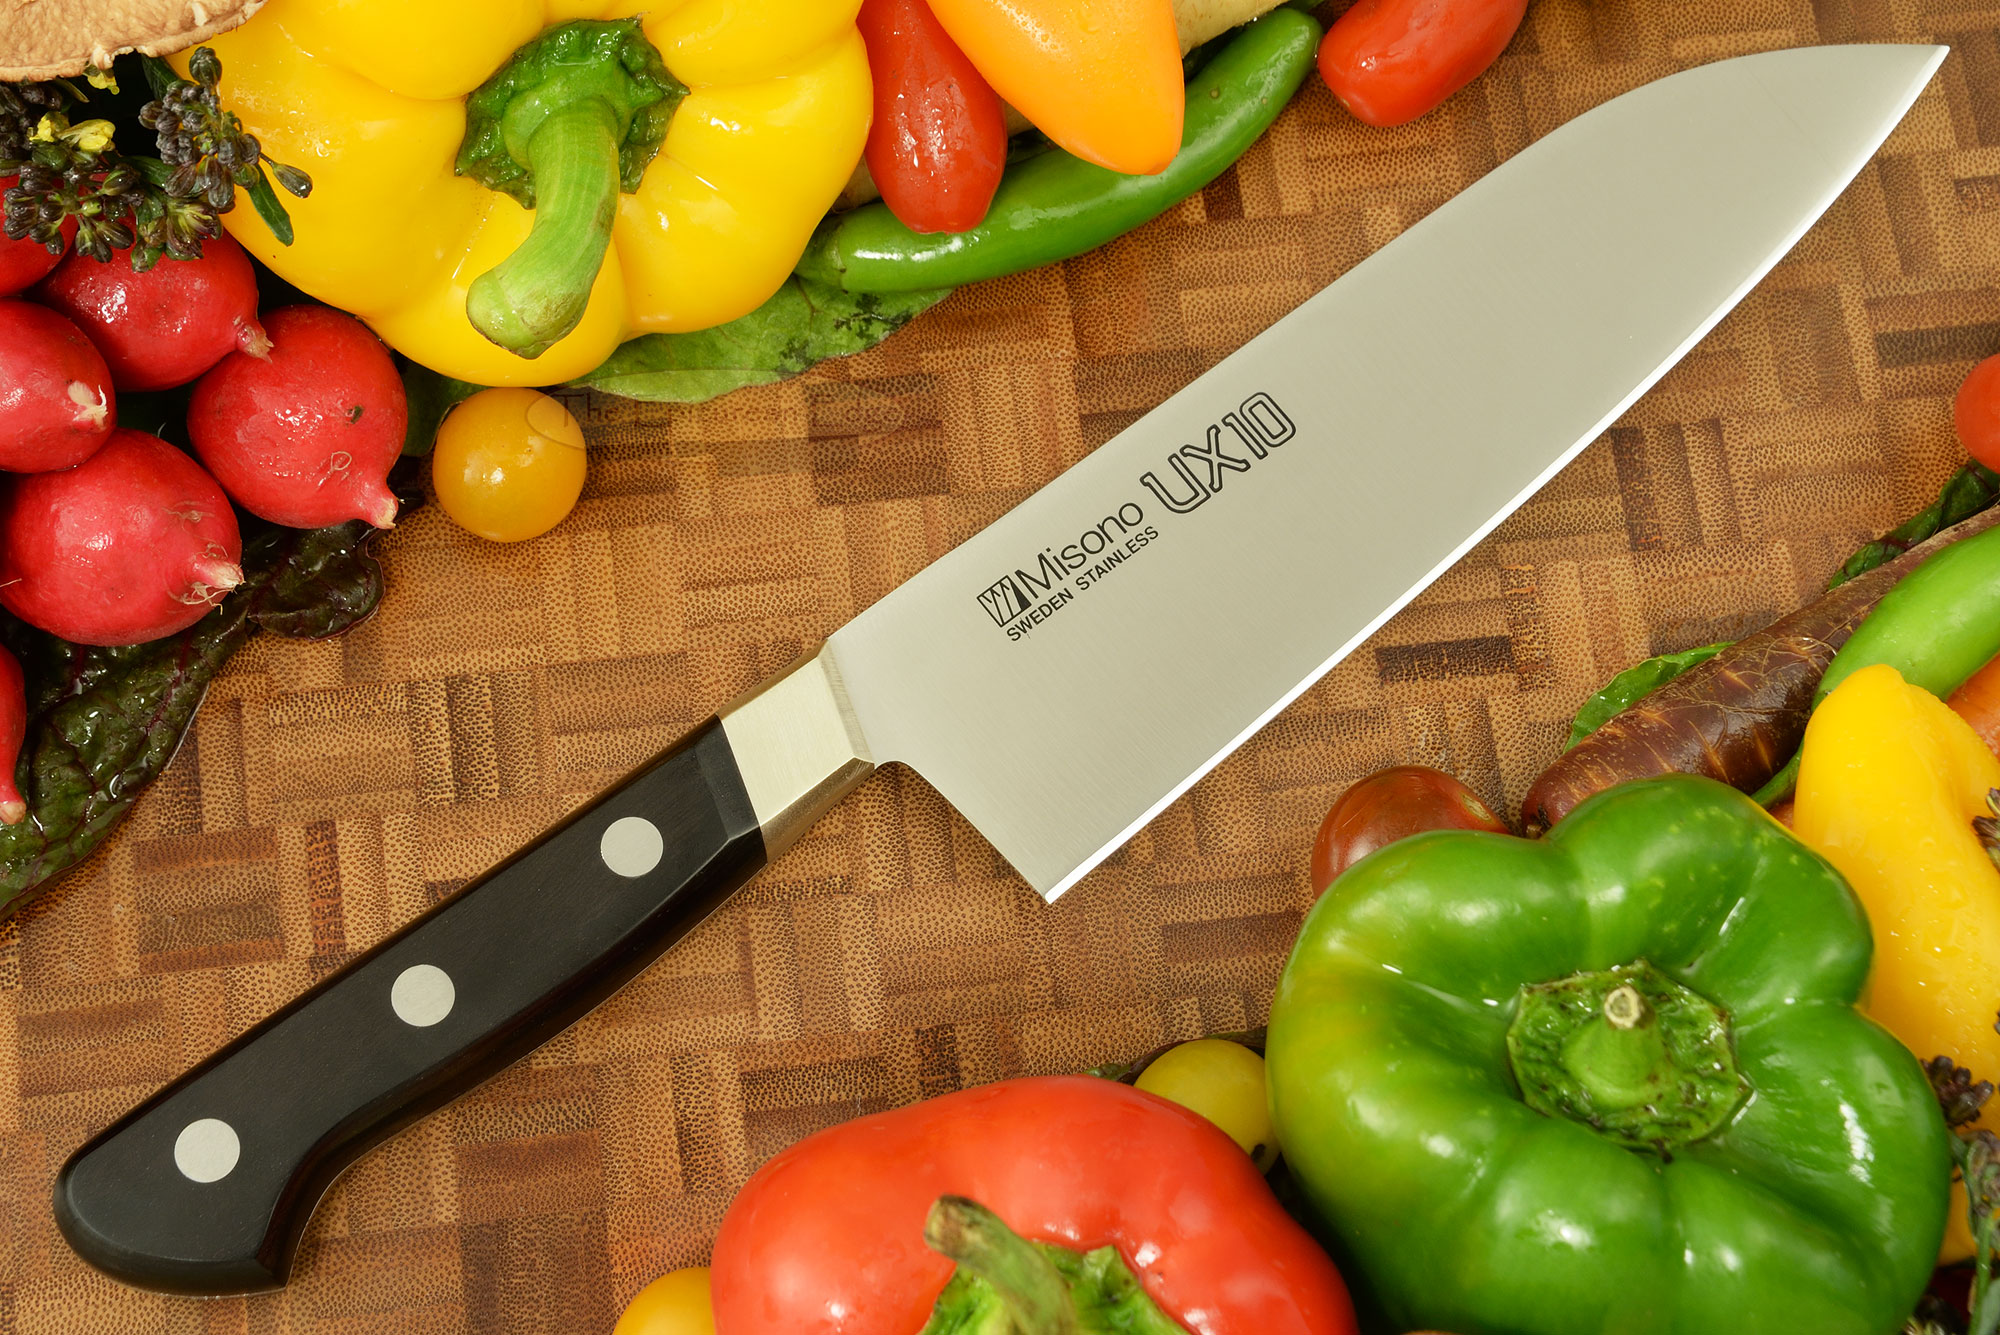 Seki Japan Chef Knife Sharpening Rod - 6 inch, Durable Ceramic Honing Steel Knife Sharpener